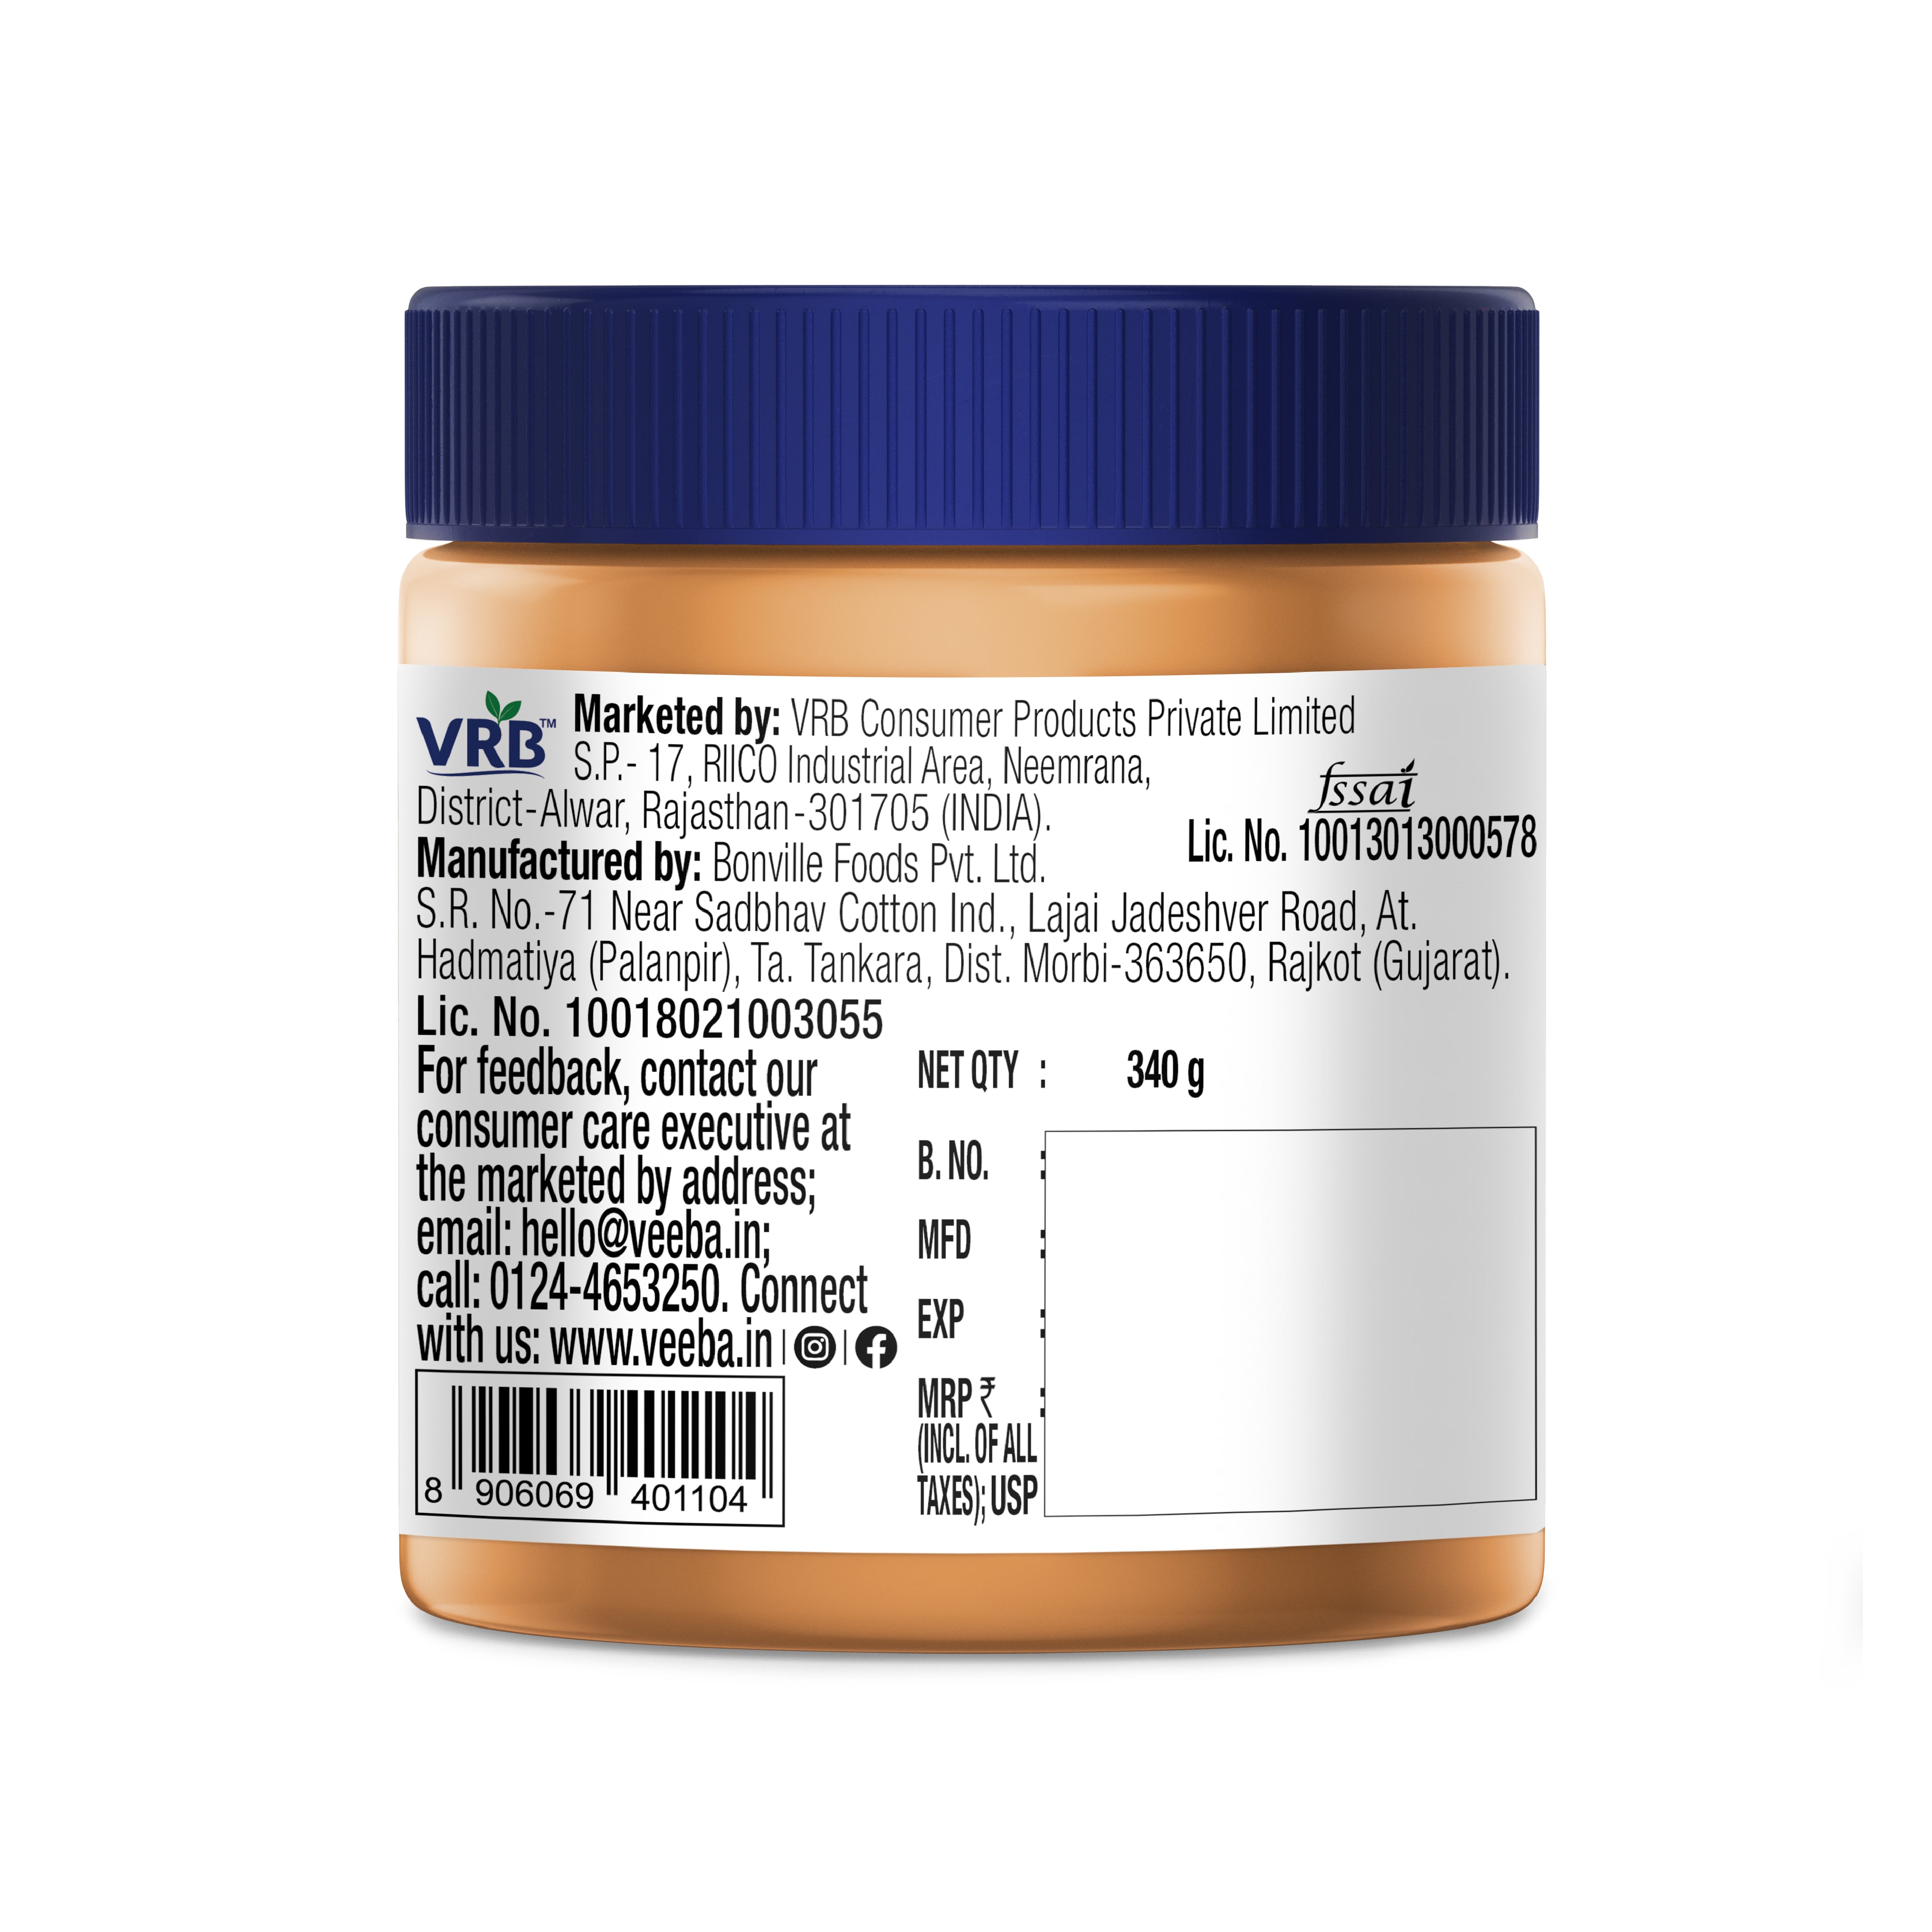 Creamy Peanut Butter added Vitamin A & D (340 g)